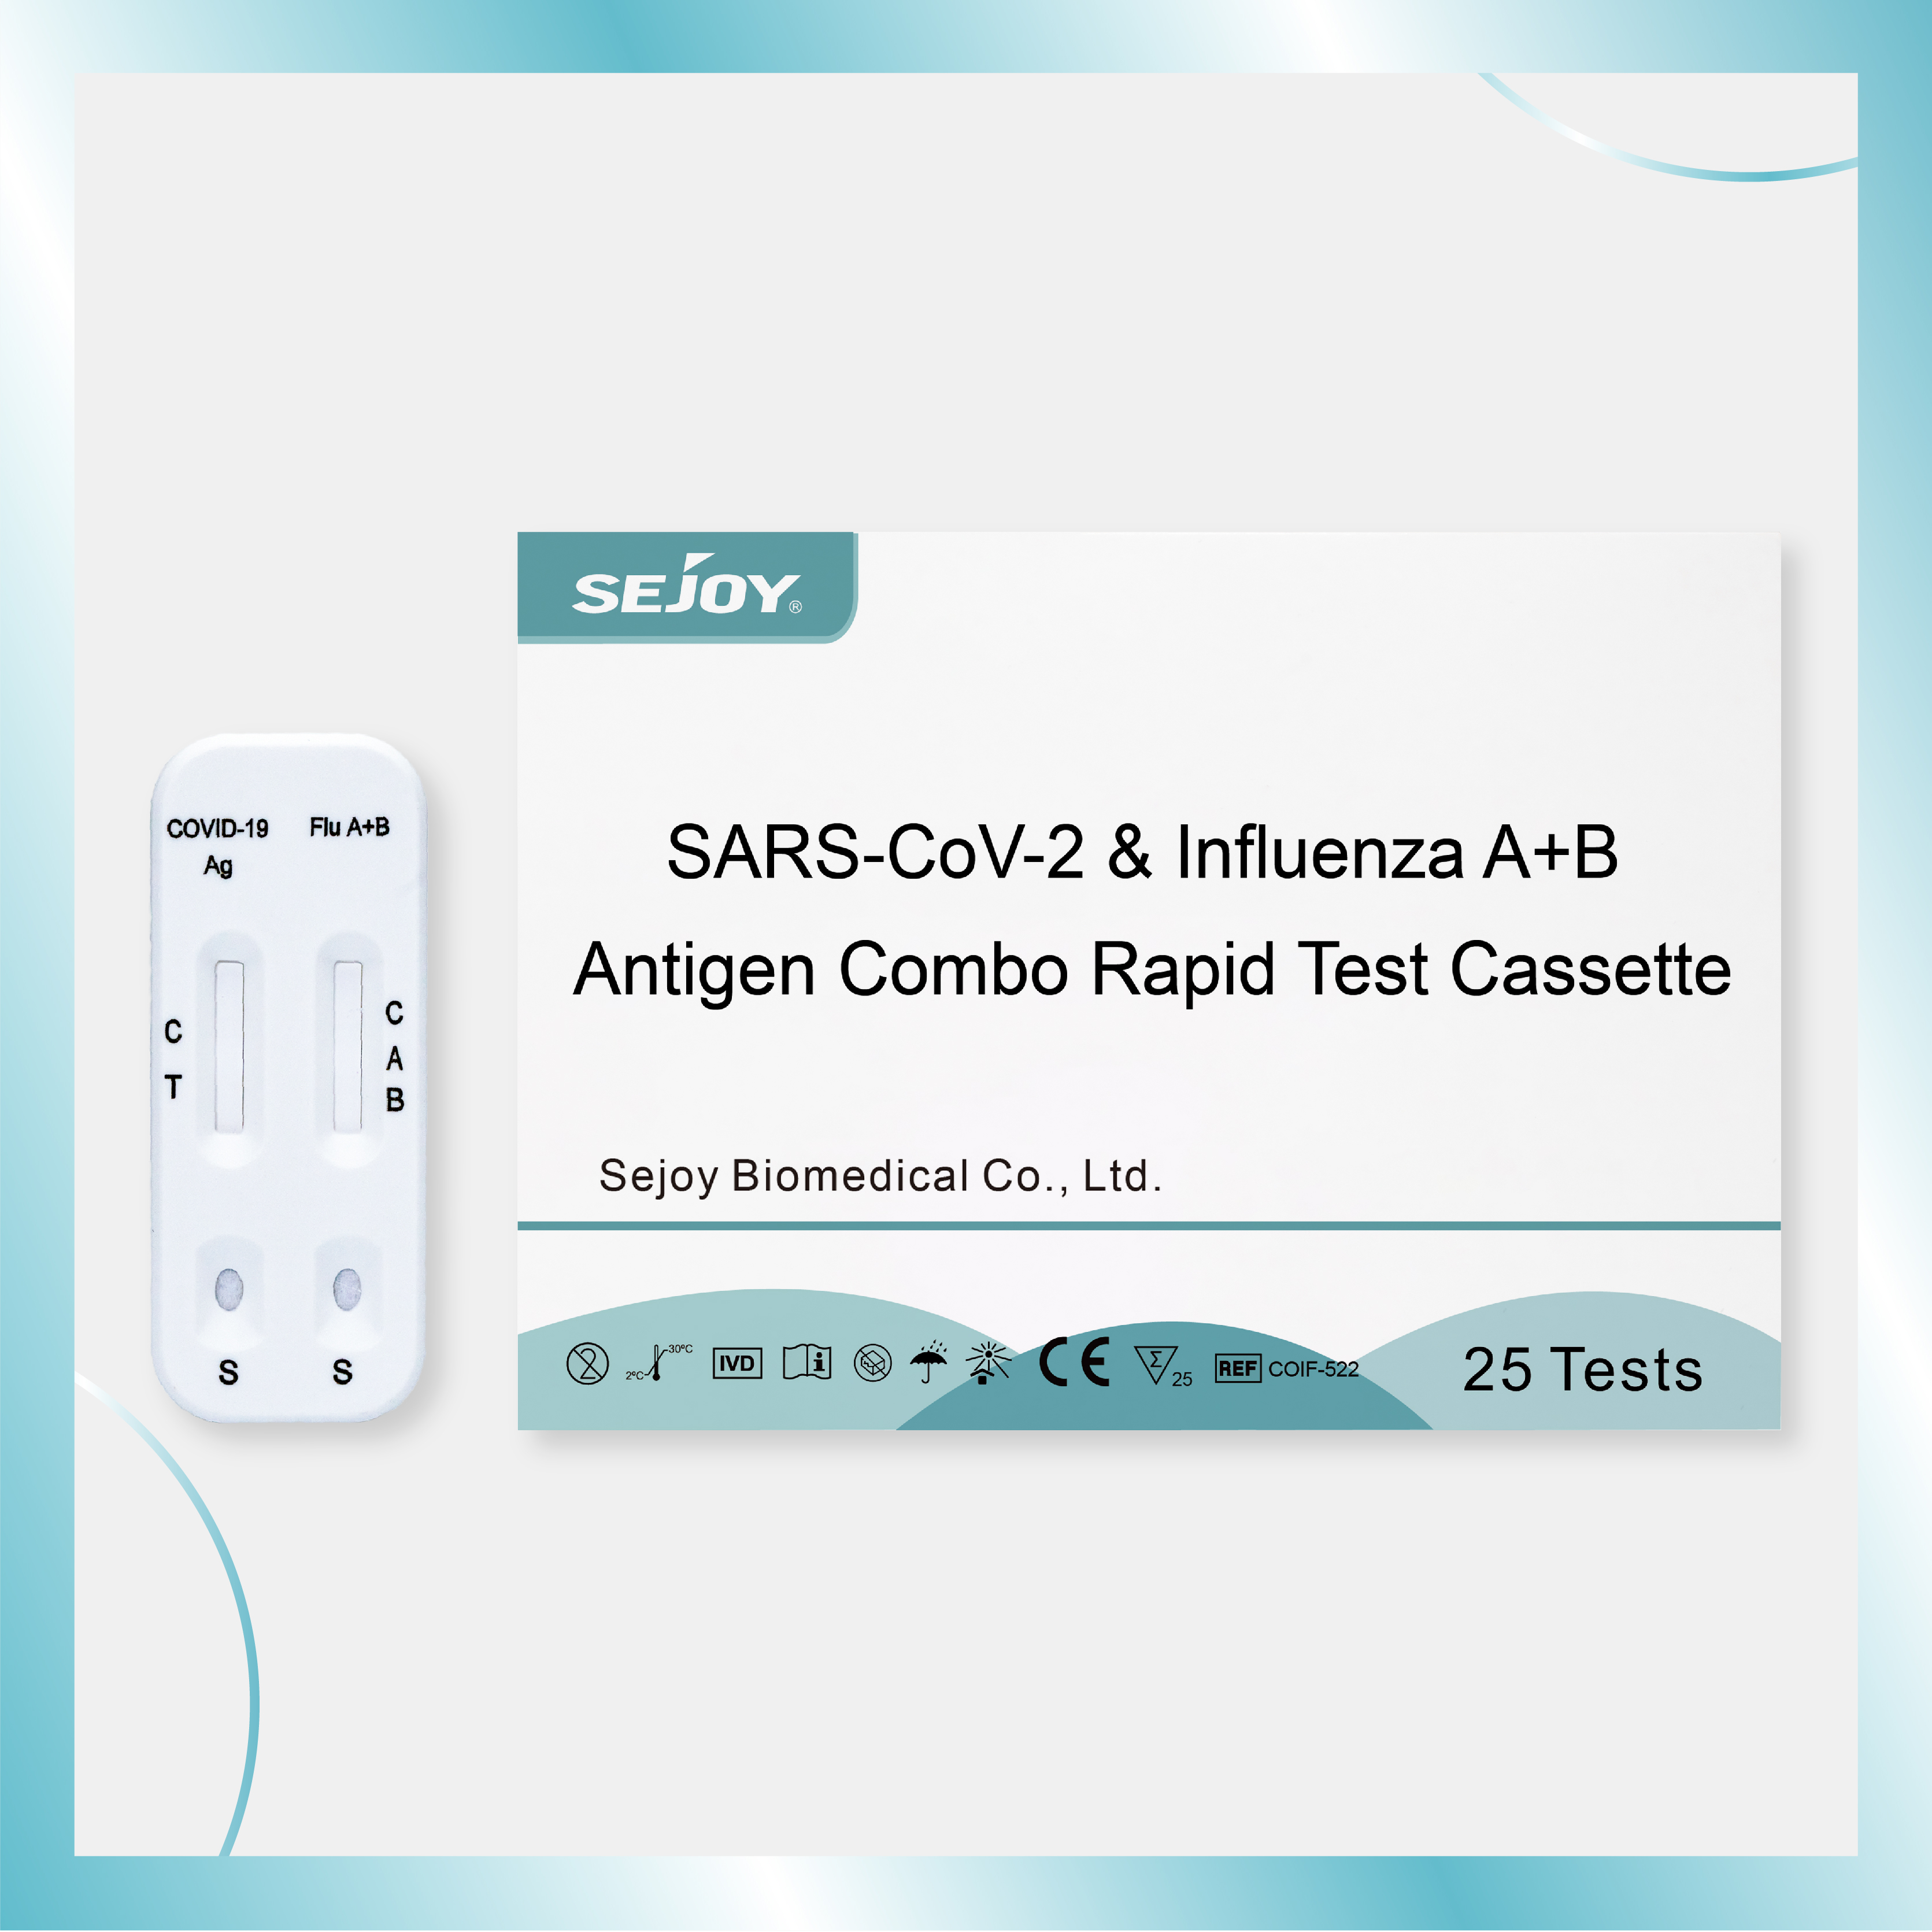 SARS-CoV-2 & Influenza A+B Antigen Combo Rapid Test Cassette